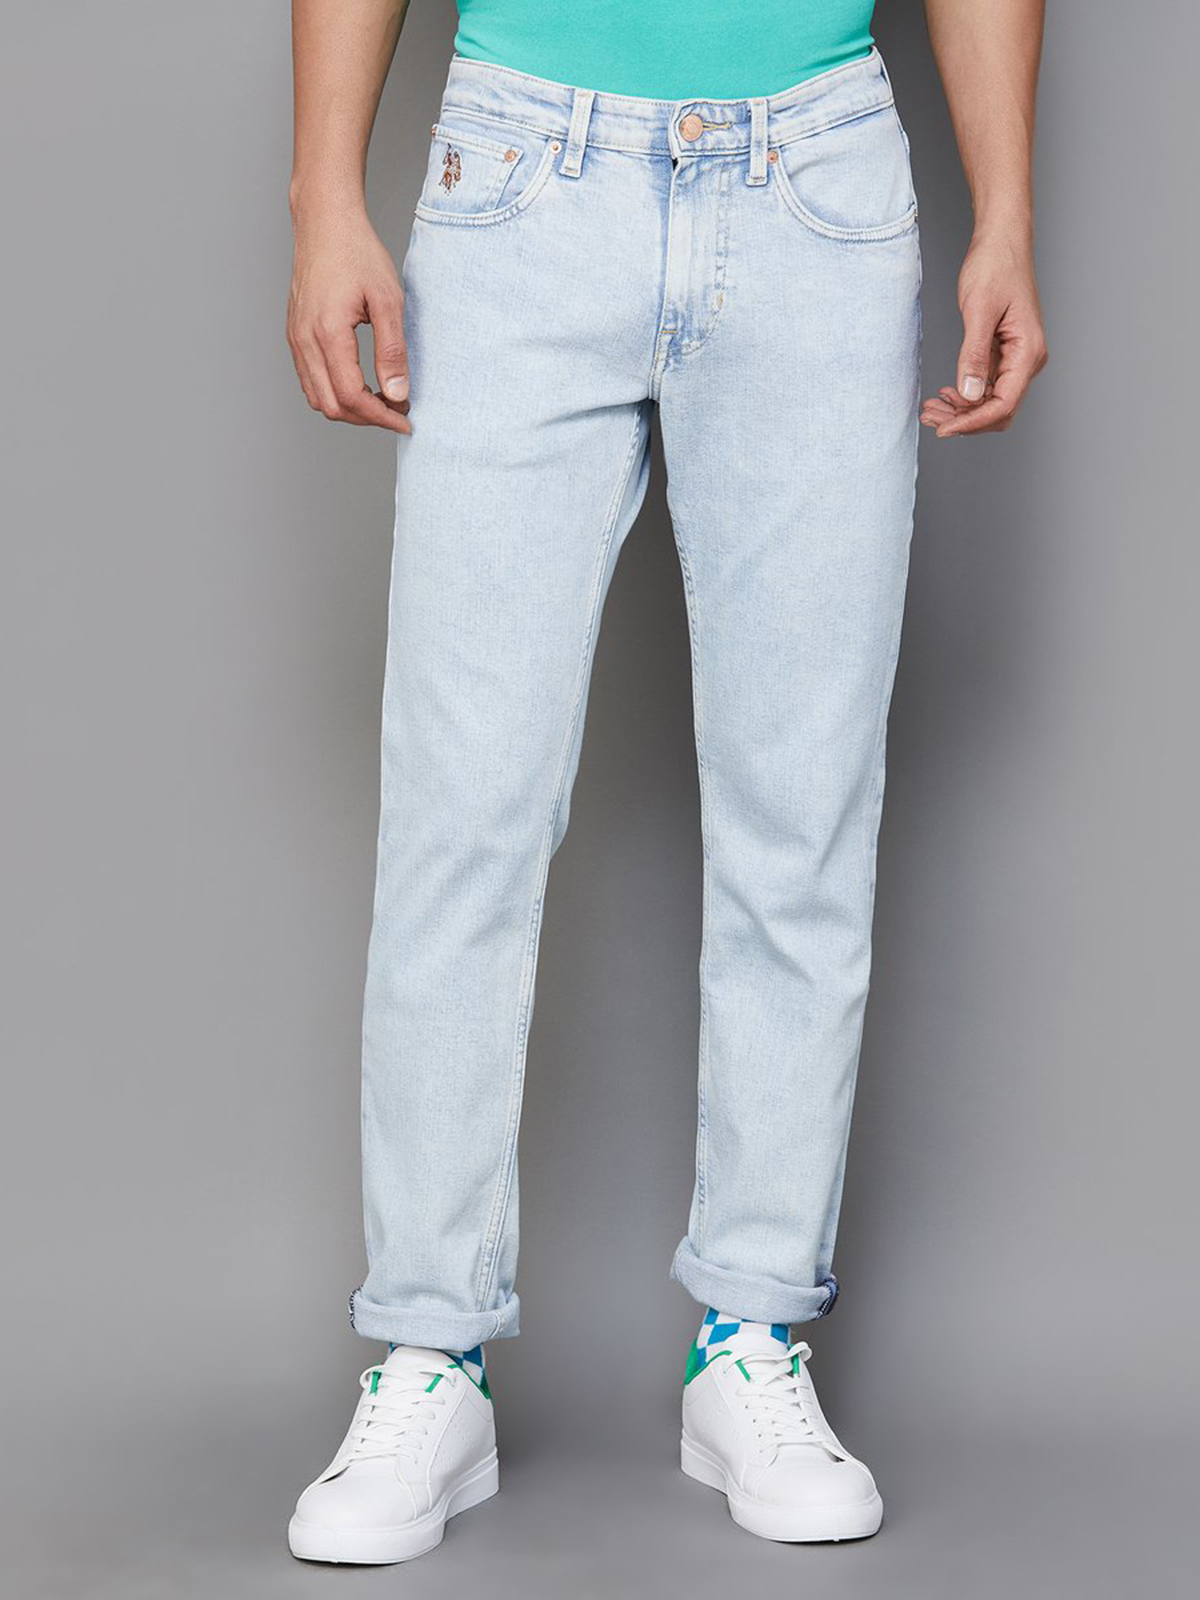 Jeans & Pants | US Polo Assn Denim Jeans 👖 | Freeup